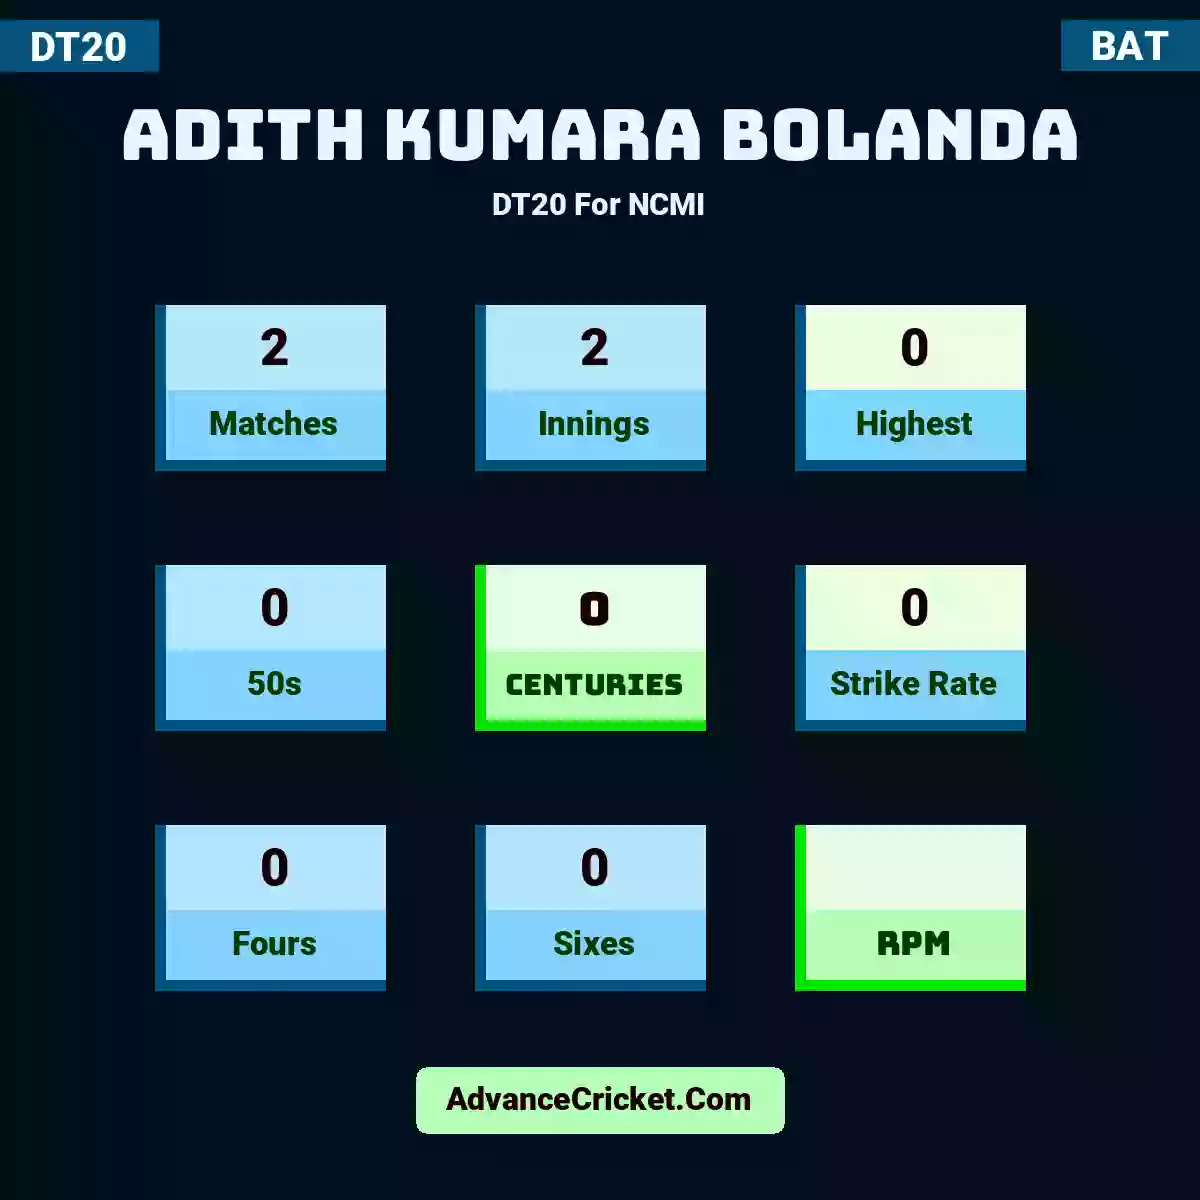 Adith Kumara Bolanda DT20  For NCMI, Adith Kumara Bolanda played 2 matches, scored 0 runs as highest, 0 half-centuries, and 0 centuries, with a strike rate of 0. A.Kumara.Bolanda hit 0 fours and 0 sixes.